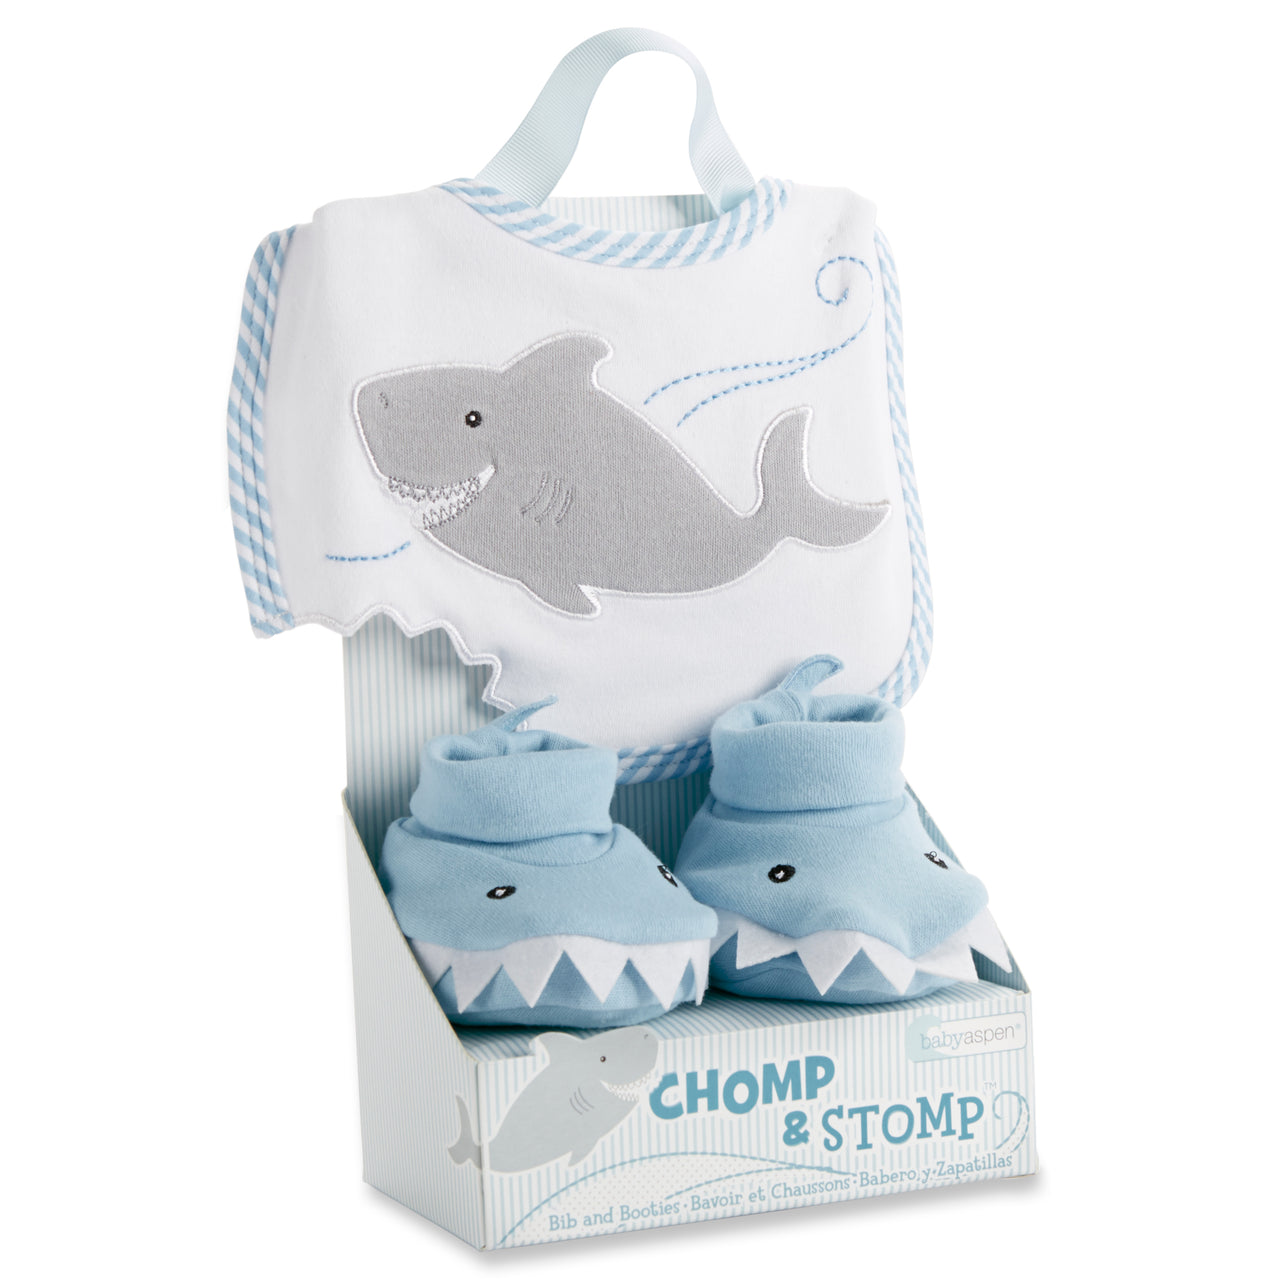 Chomp & Stomp Shark Bib & Booties Gift Set (Blue)